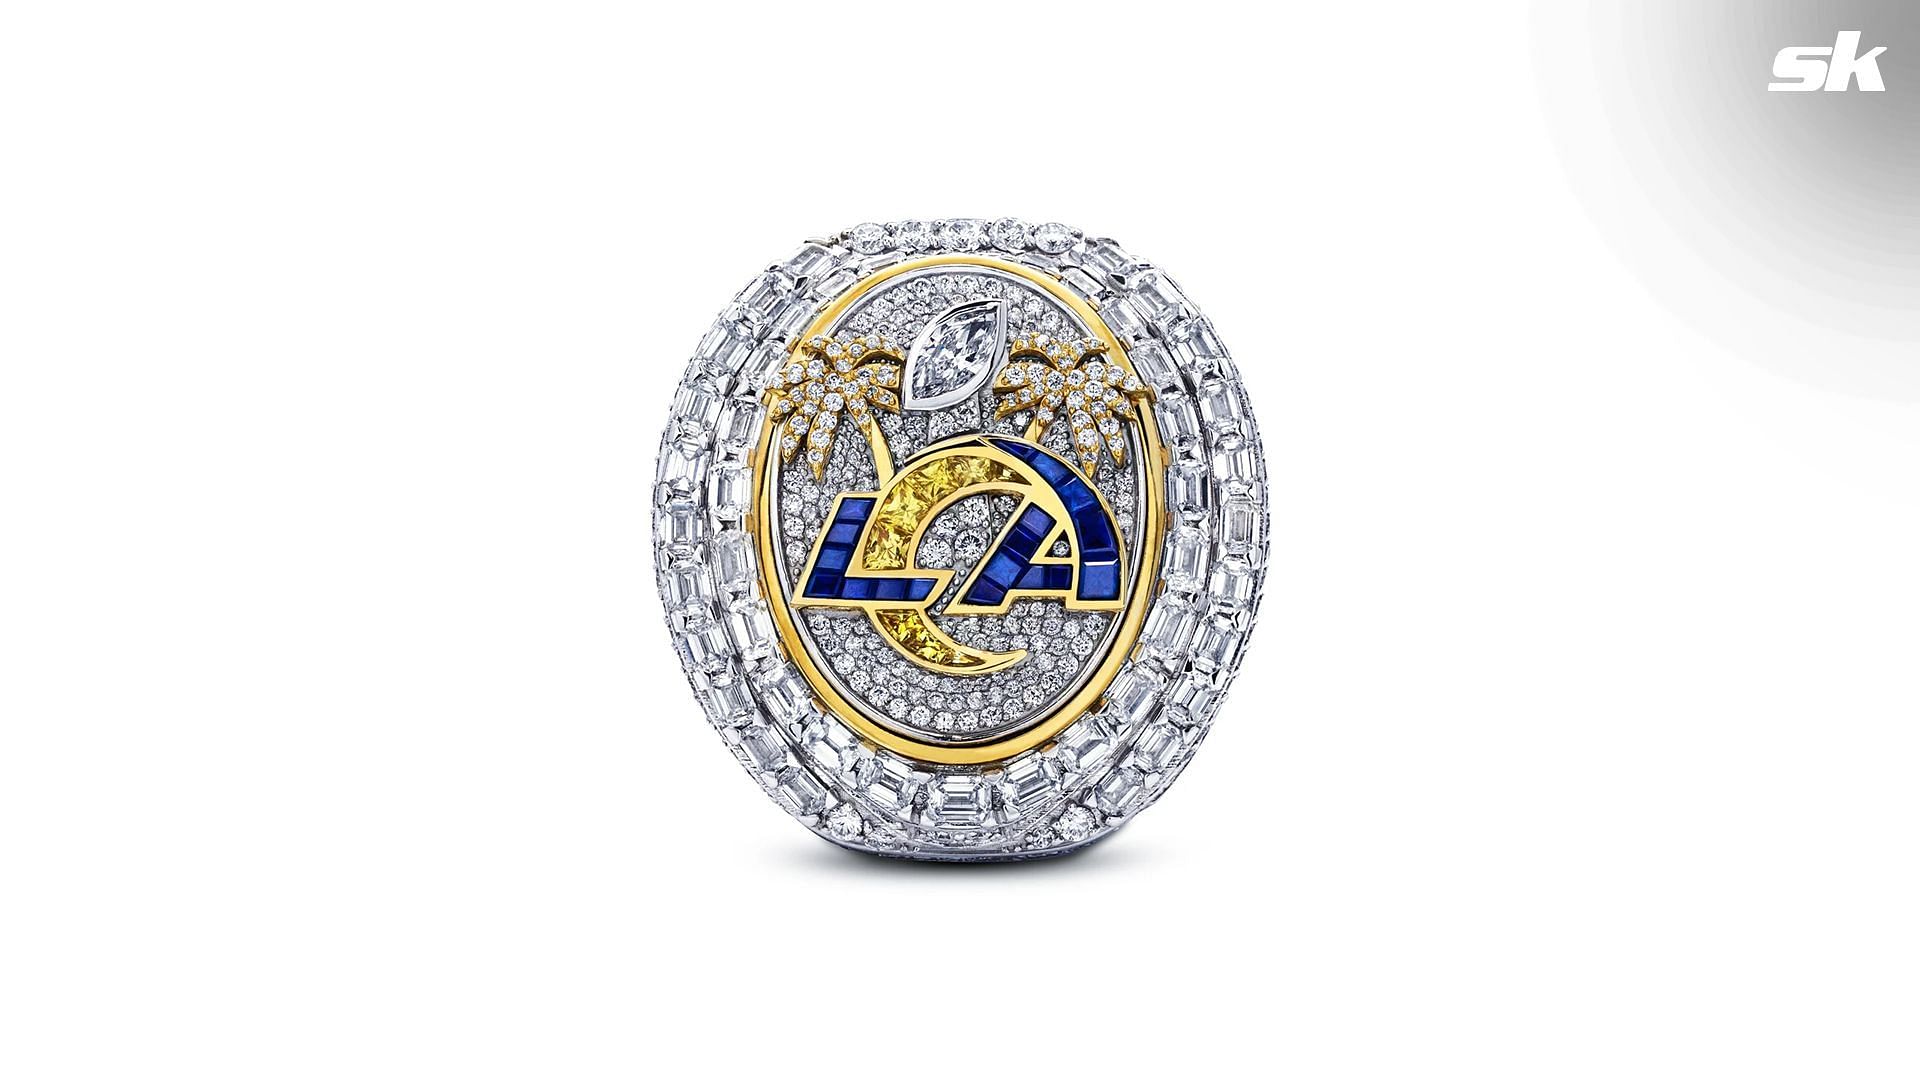 Rams Super Bowl LVI Championship Ring is Fabulous! – Los Angeles Sentinel